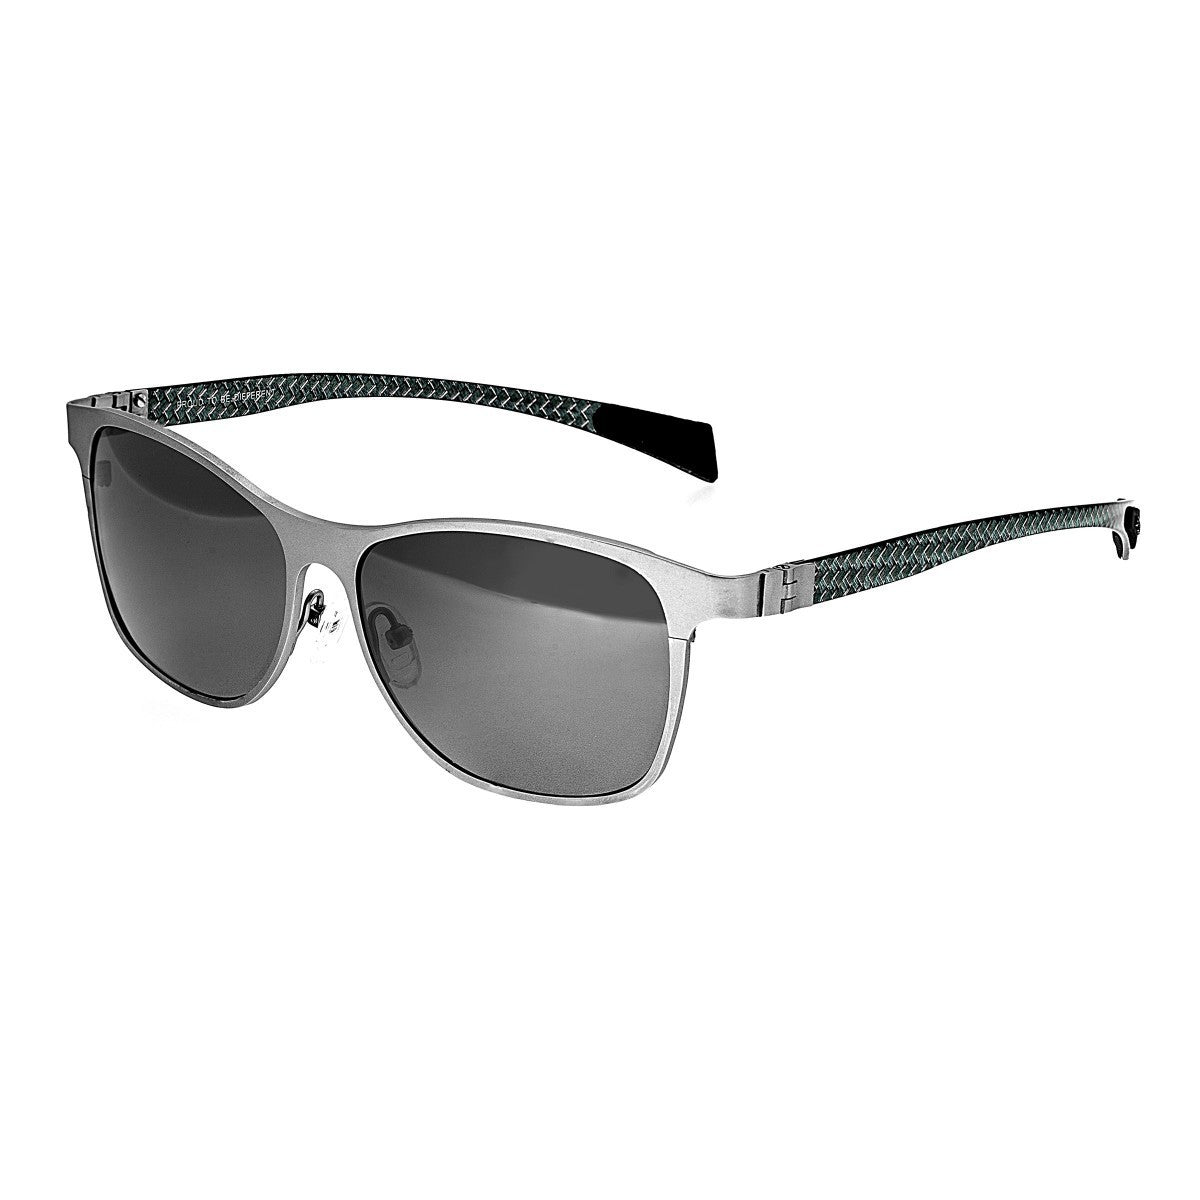 Breed Templar Titanium Polarized Sunglasses - Silver/Black - BSG035SR